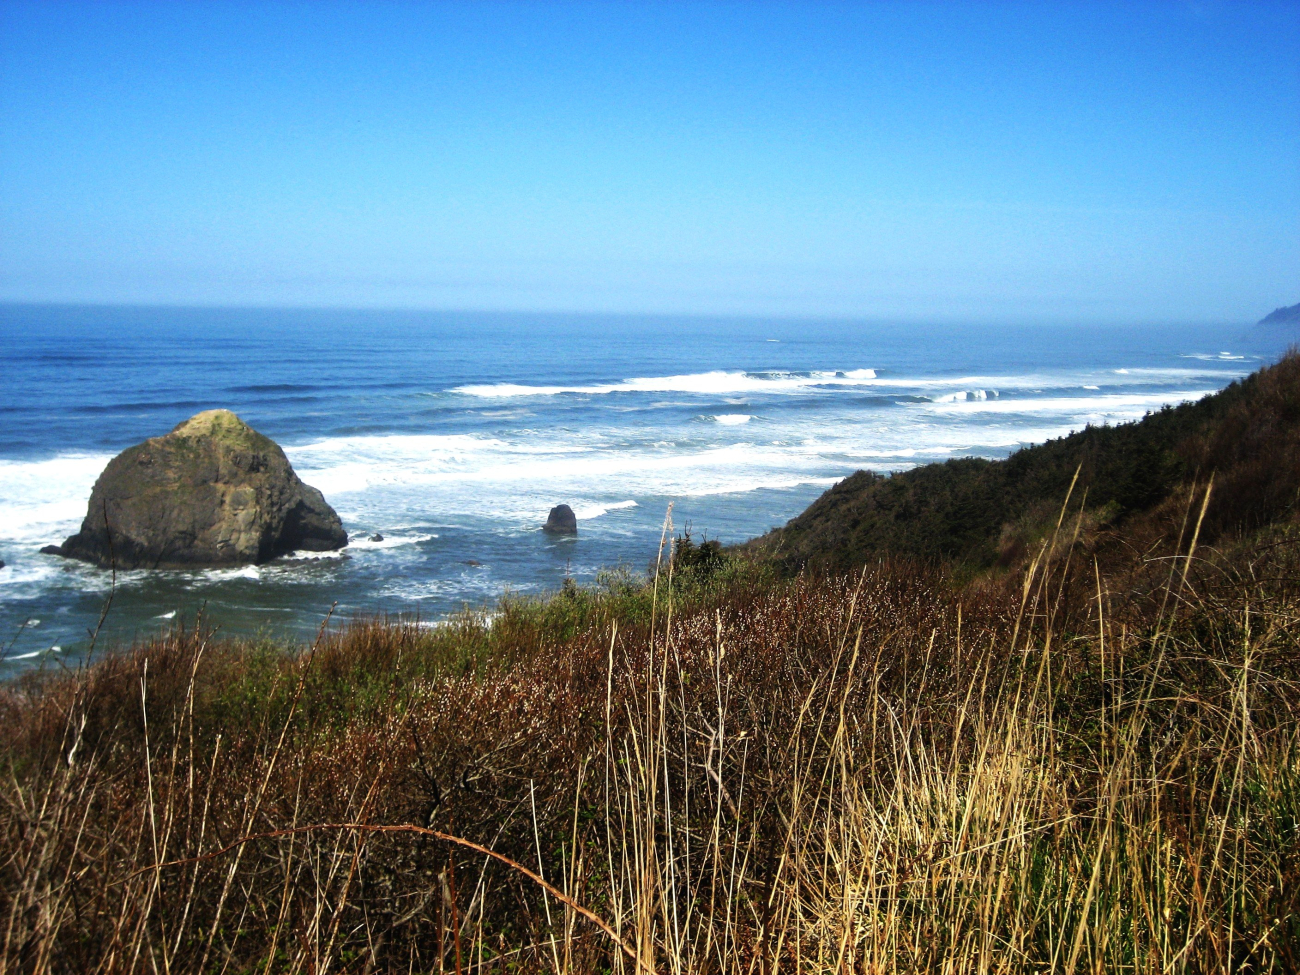 Sea stacks and never-ending surf characterize the Oregon coast